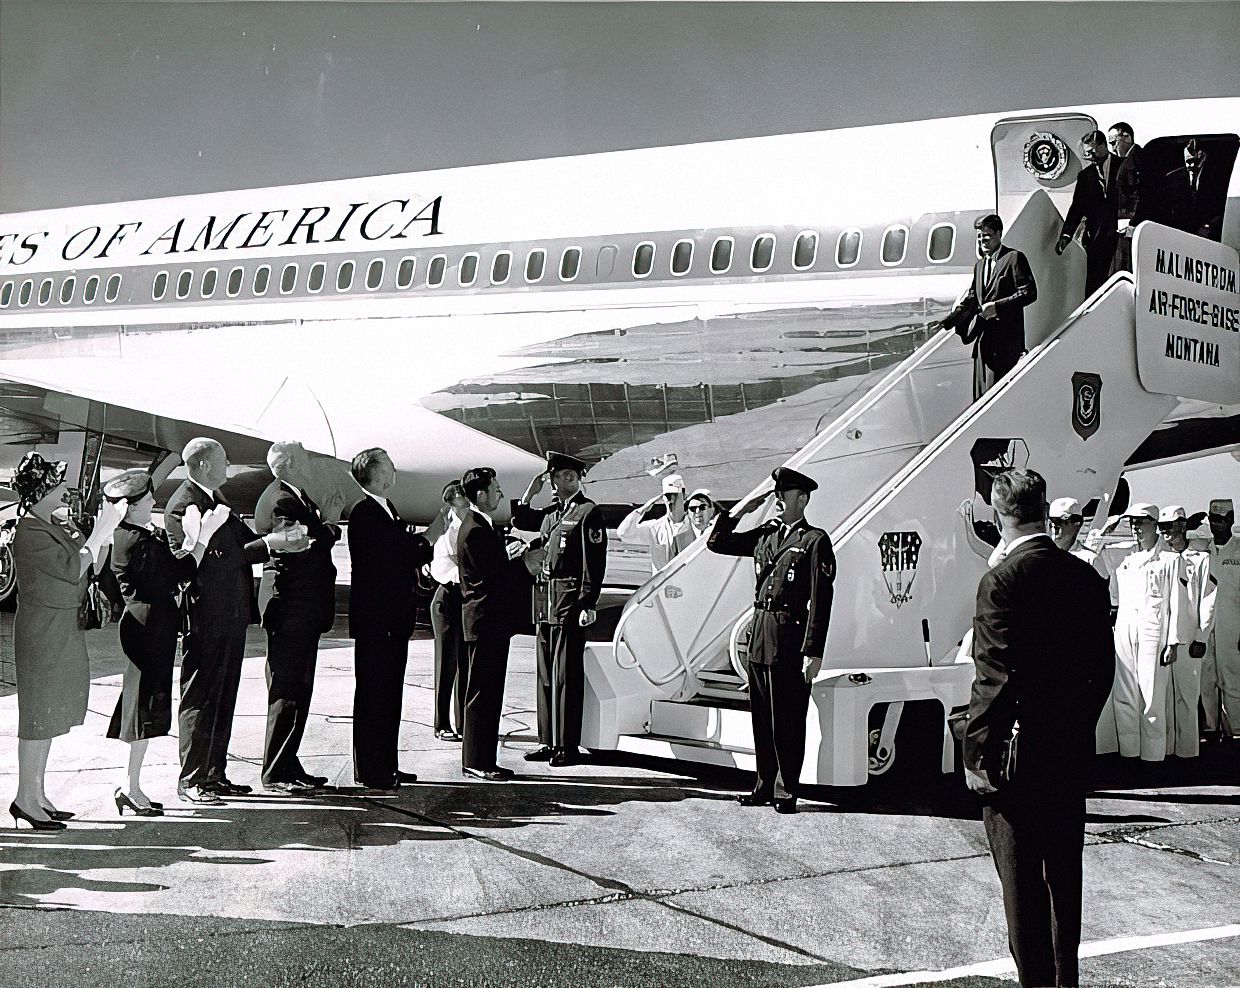 Визит президента Кеннеди на авиабазу Малстром после кубинского кризиса